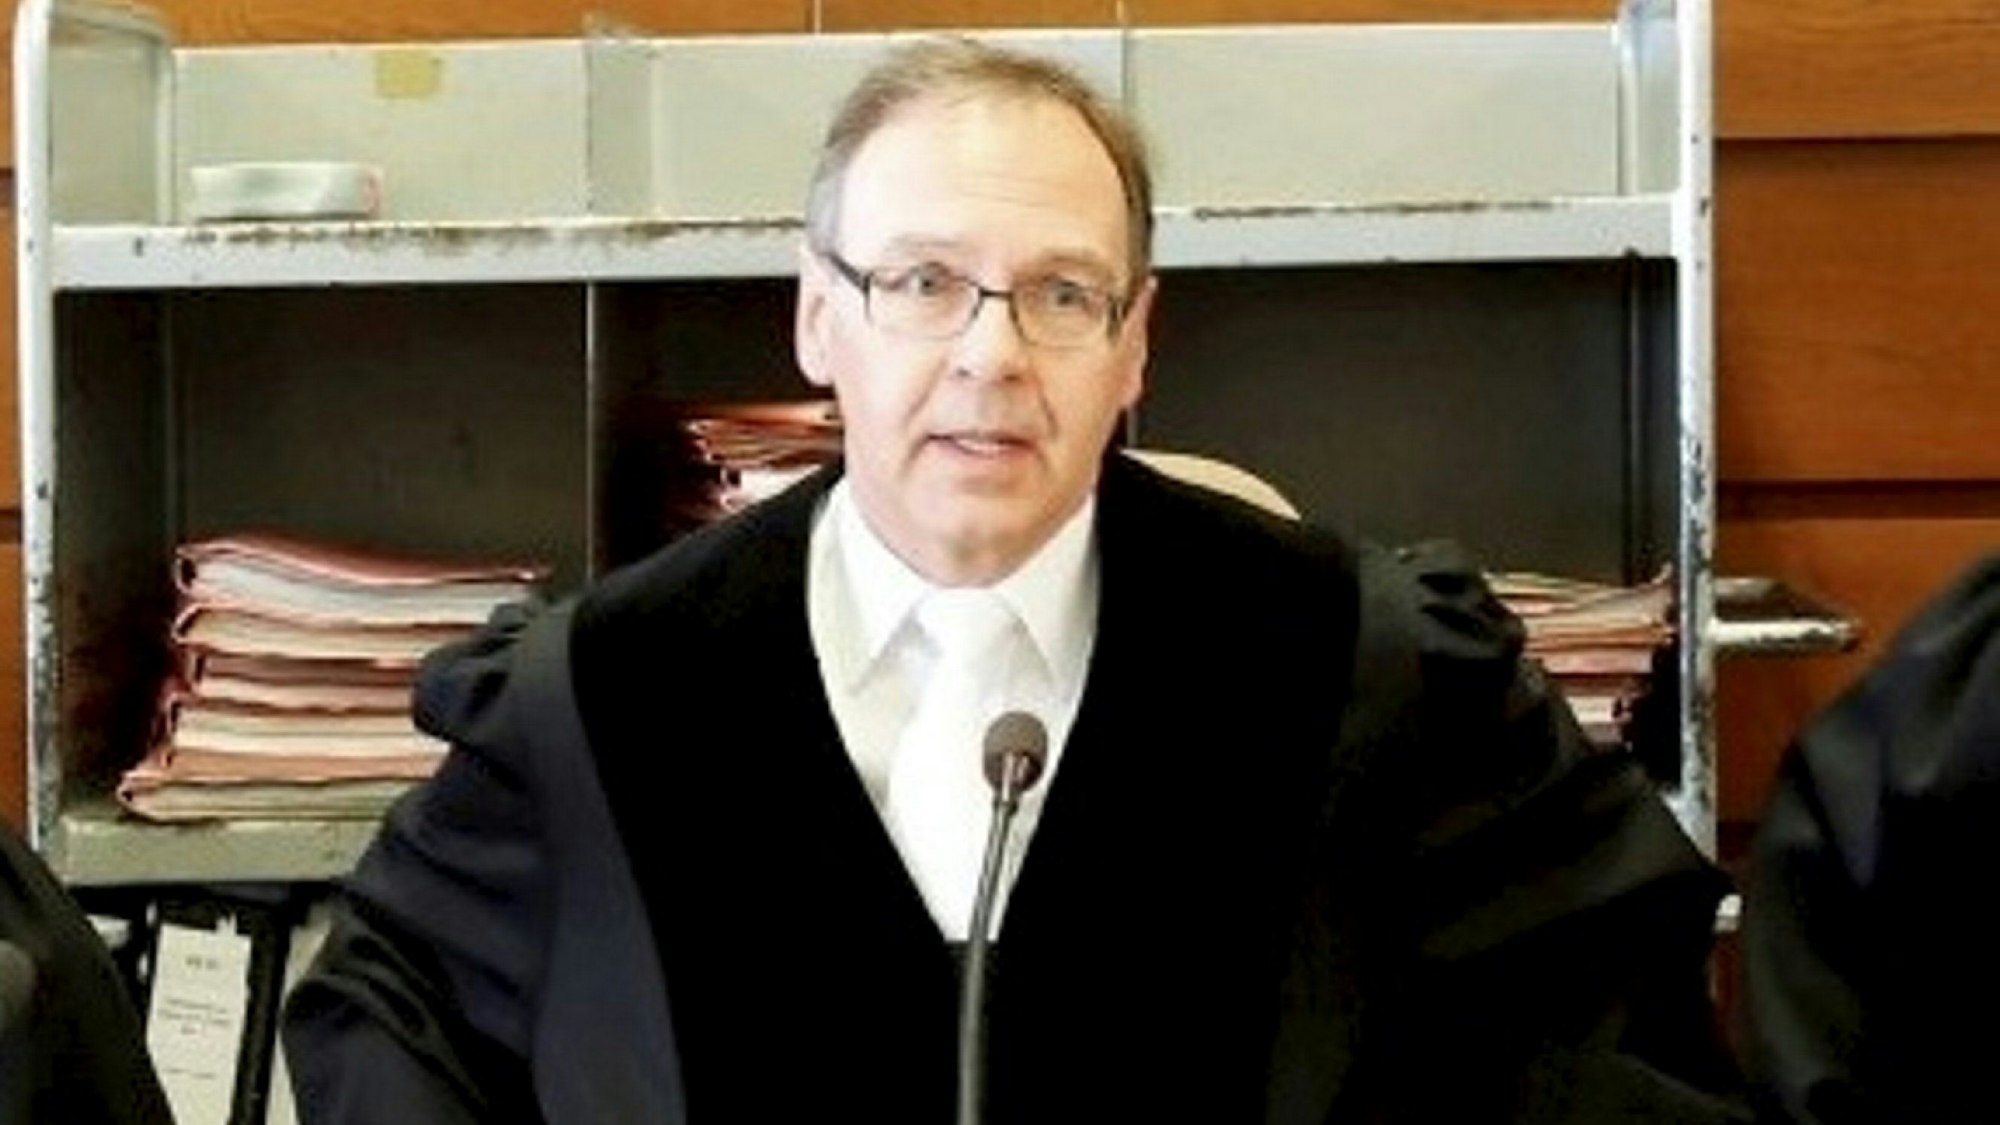 Der Vorsitzende Richter Jörg Michael Bern leitet den Drach-Prozess.